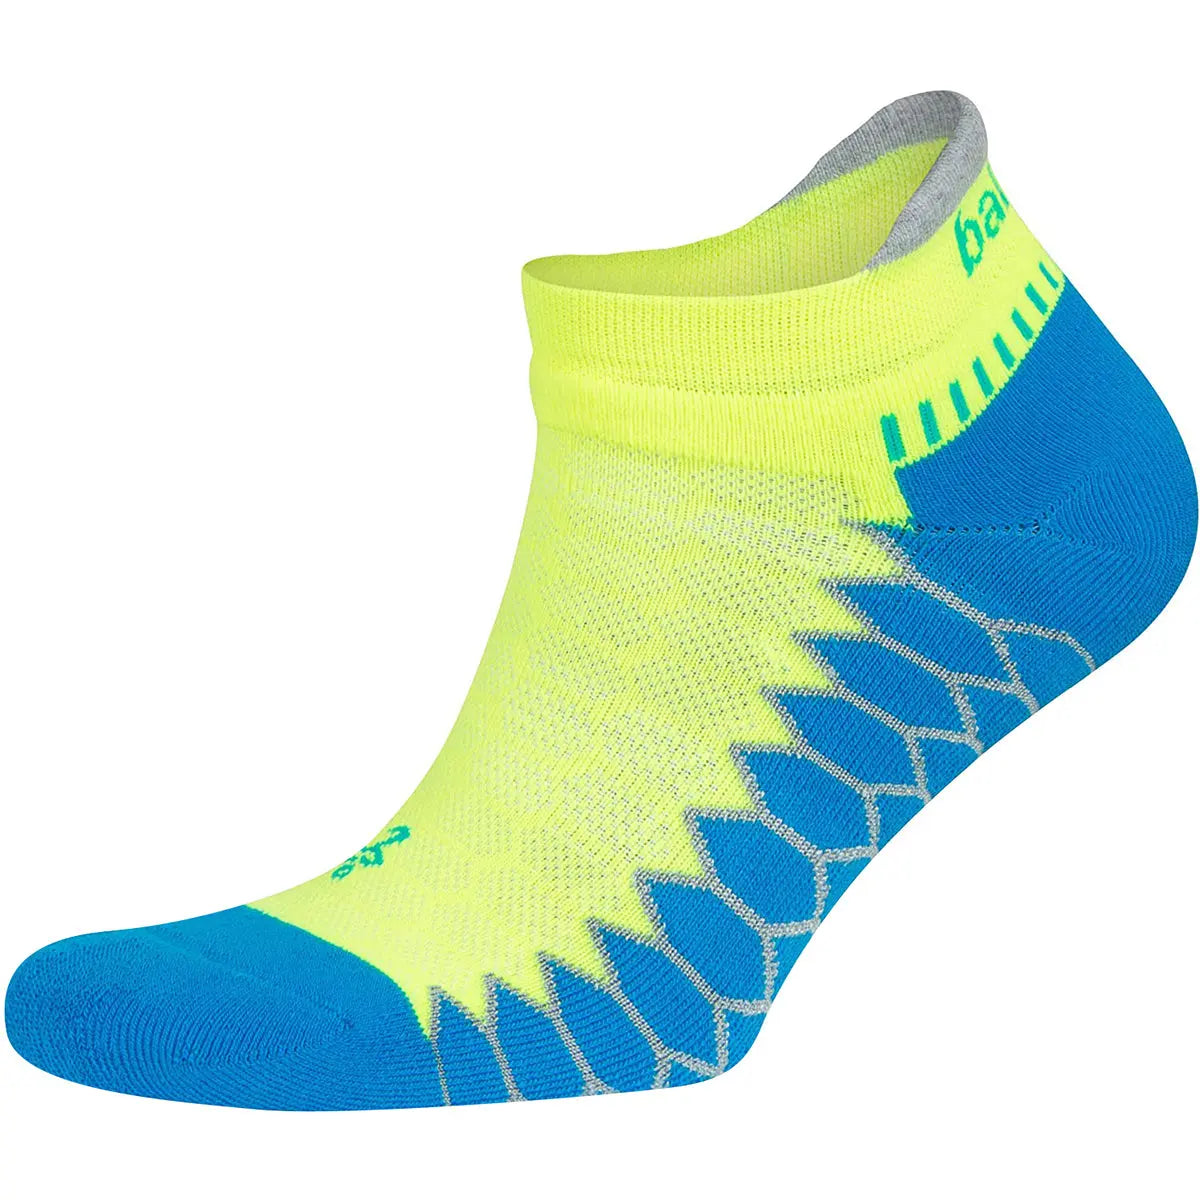 Balega Silver No Show Running Socks - Bright Turquoise/Neon Lime Balega